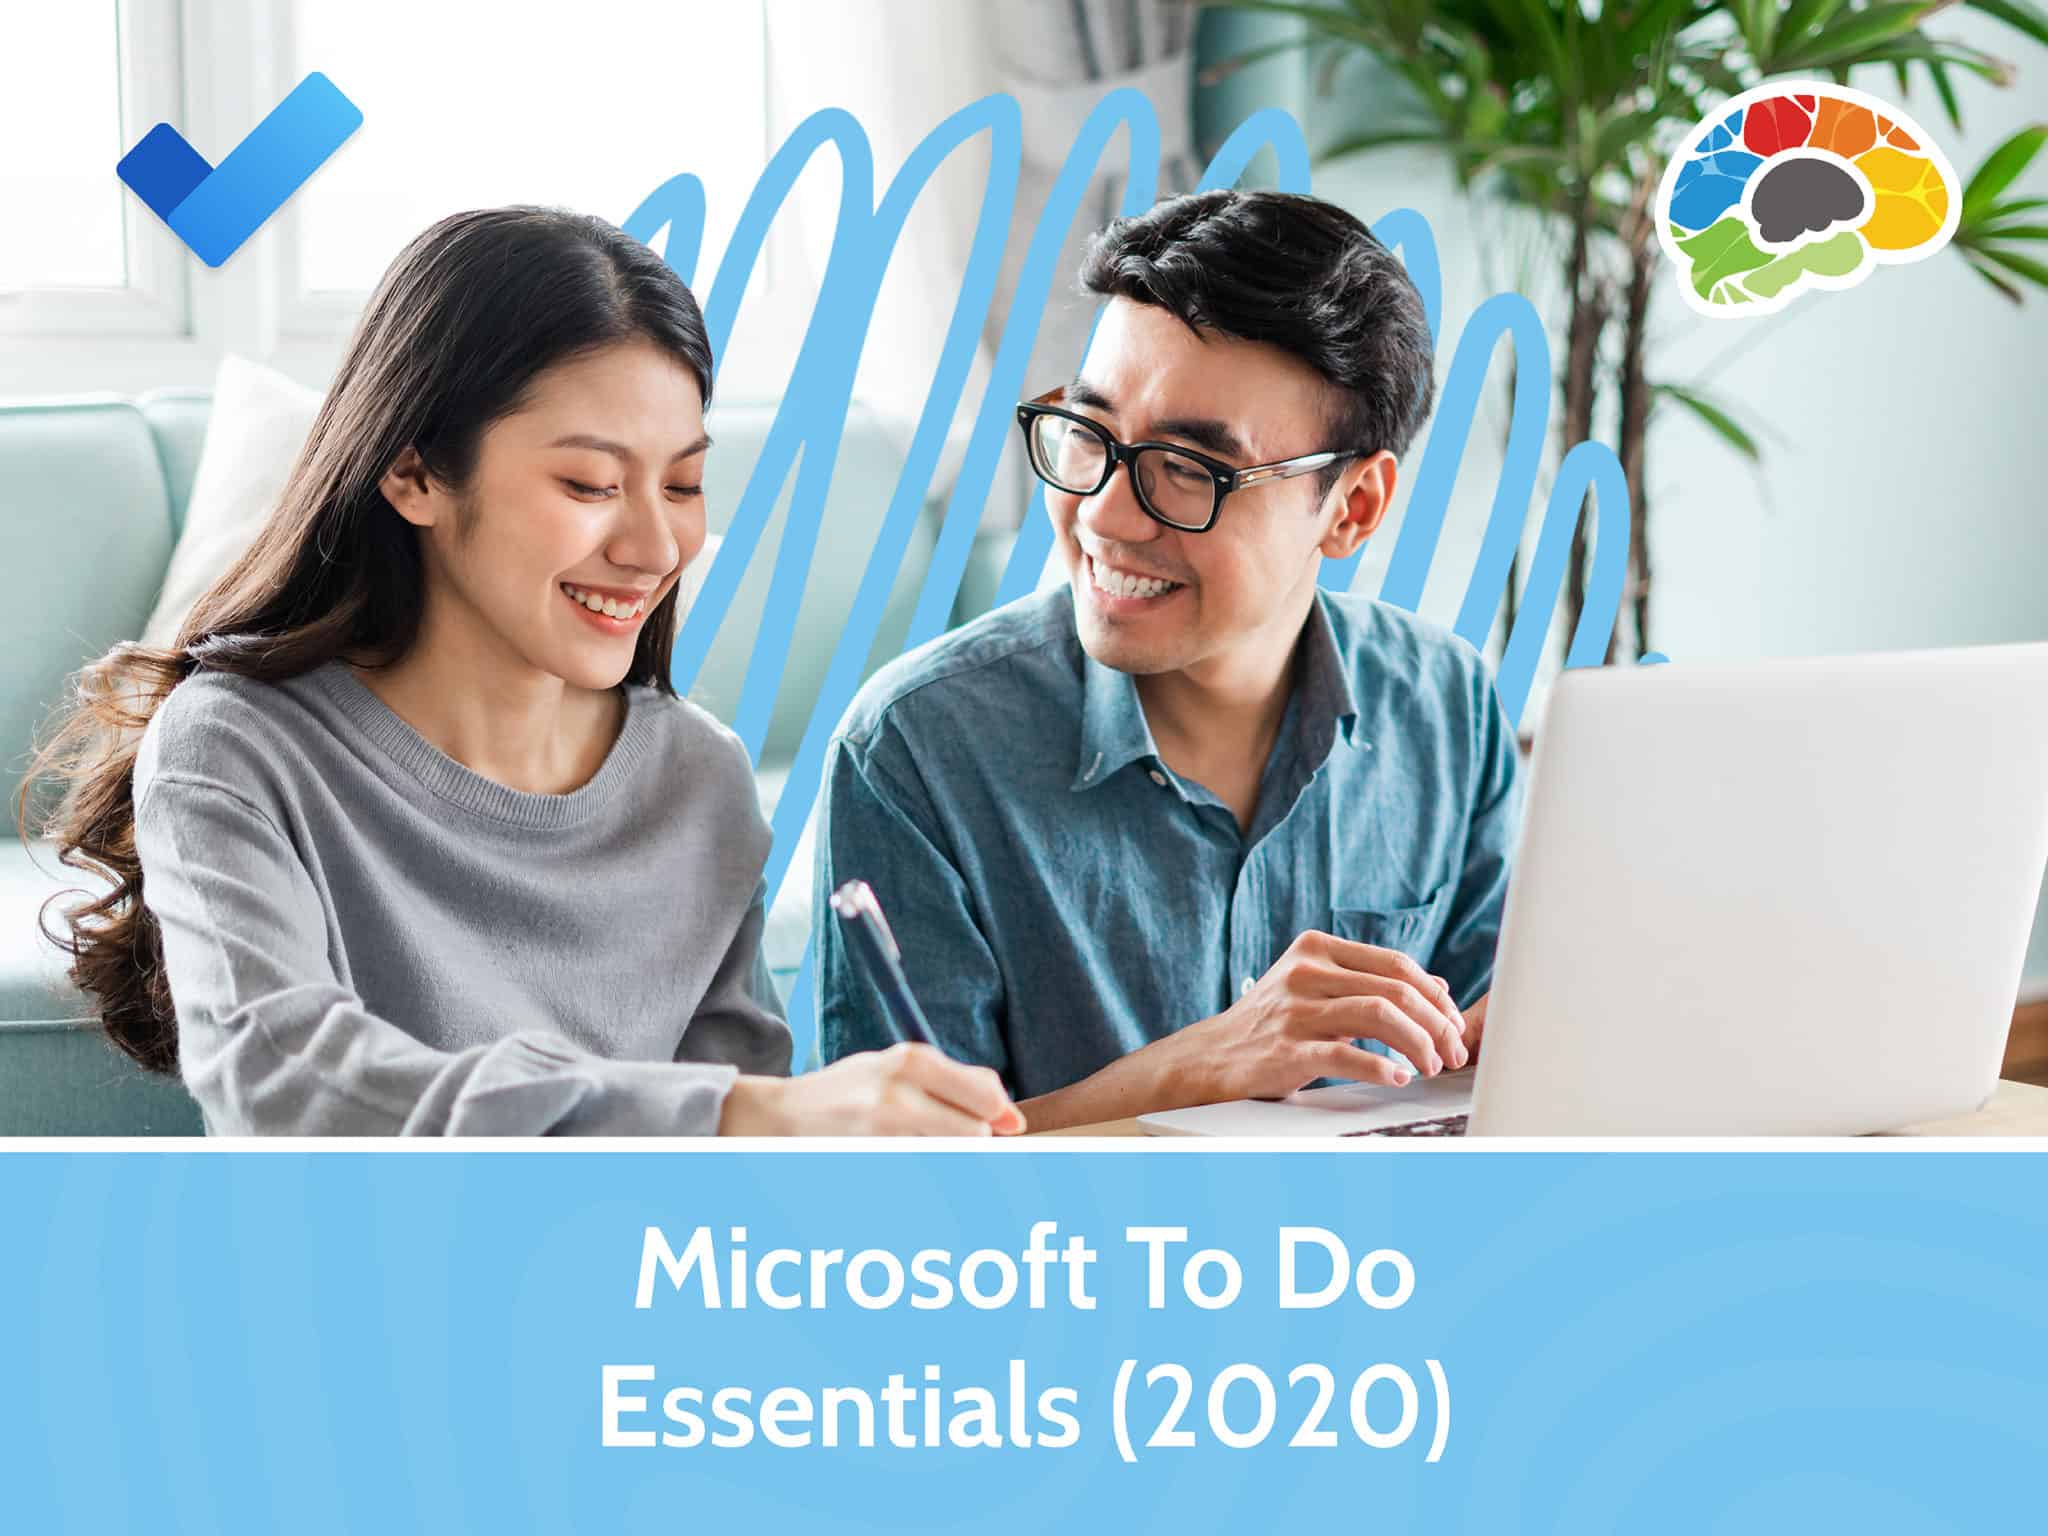 Microsoft To Do Essentials 2020 scaled